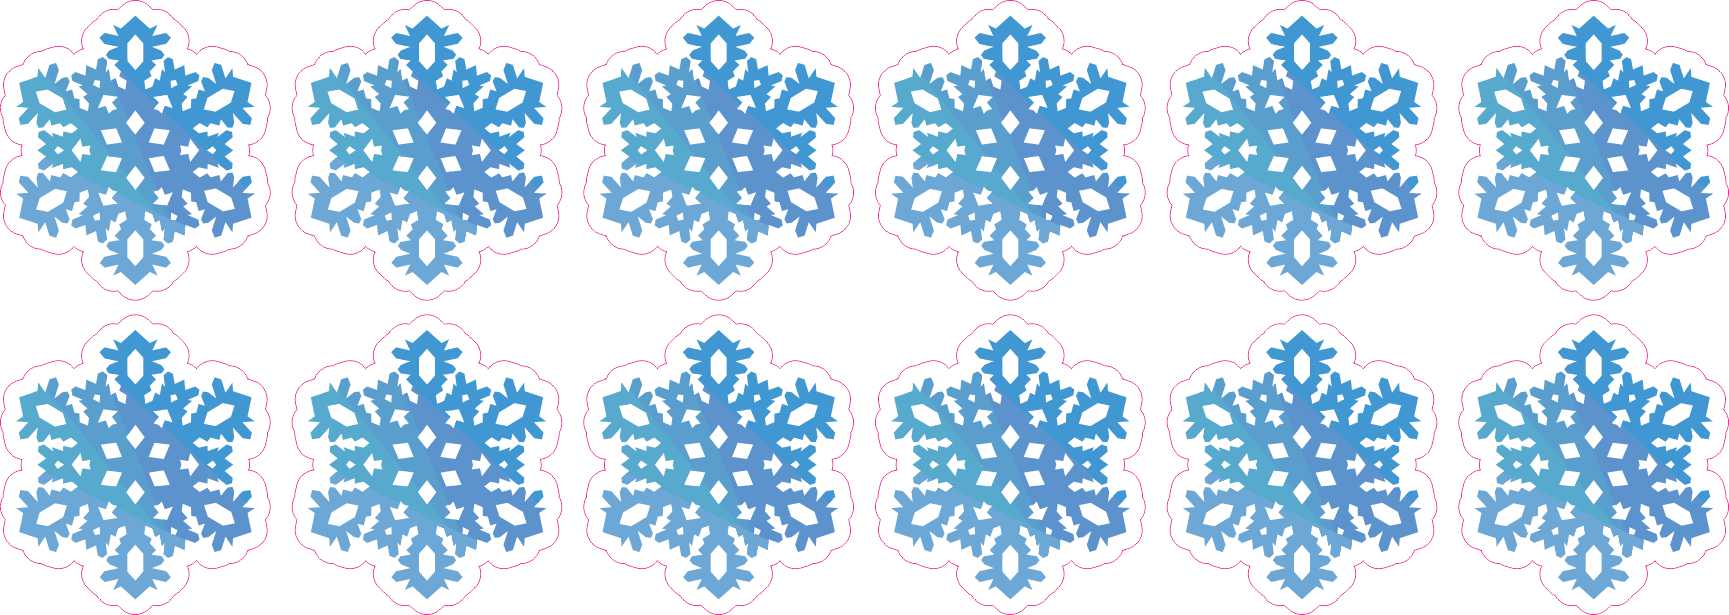 StickerTalk Snowflake Vinyl Stickers, 0.9 Inches x 1 Inches